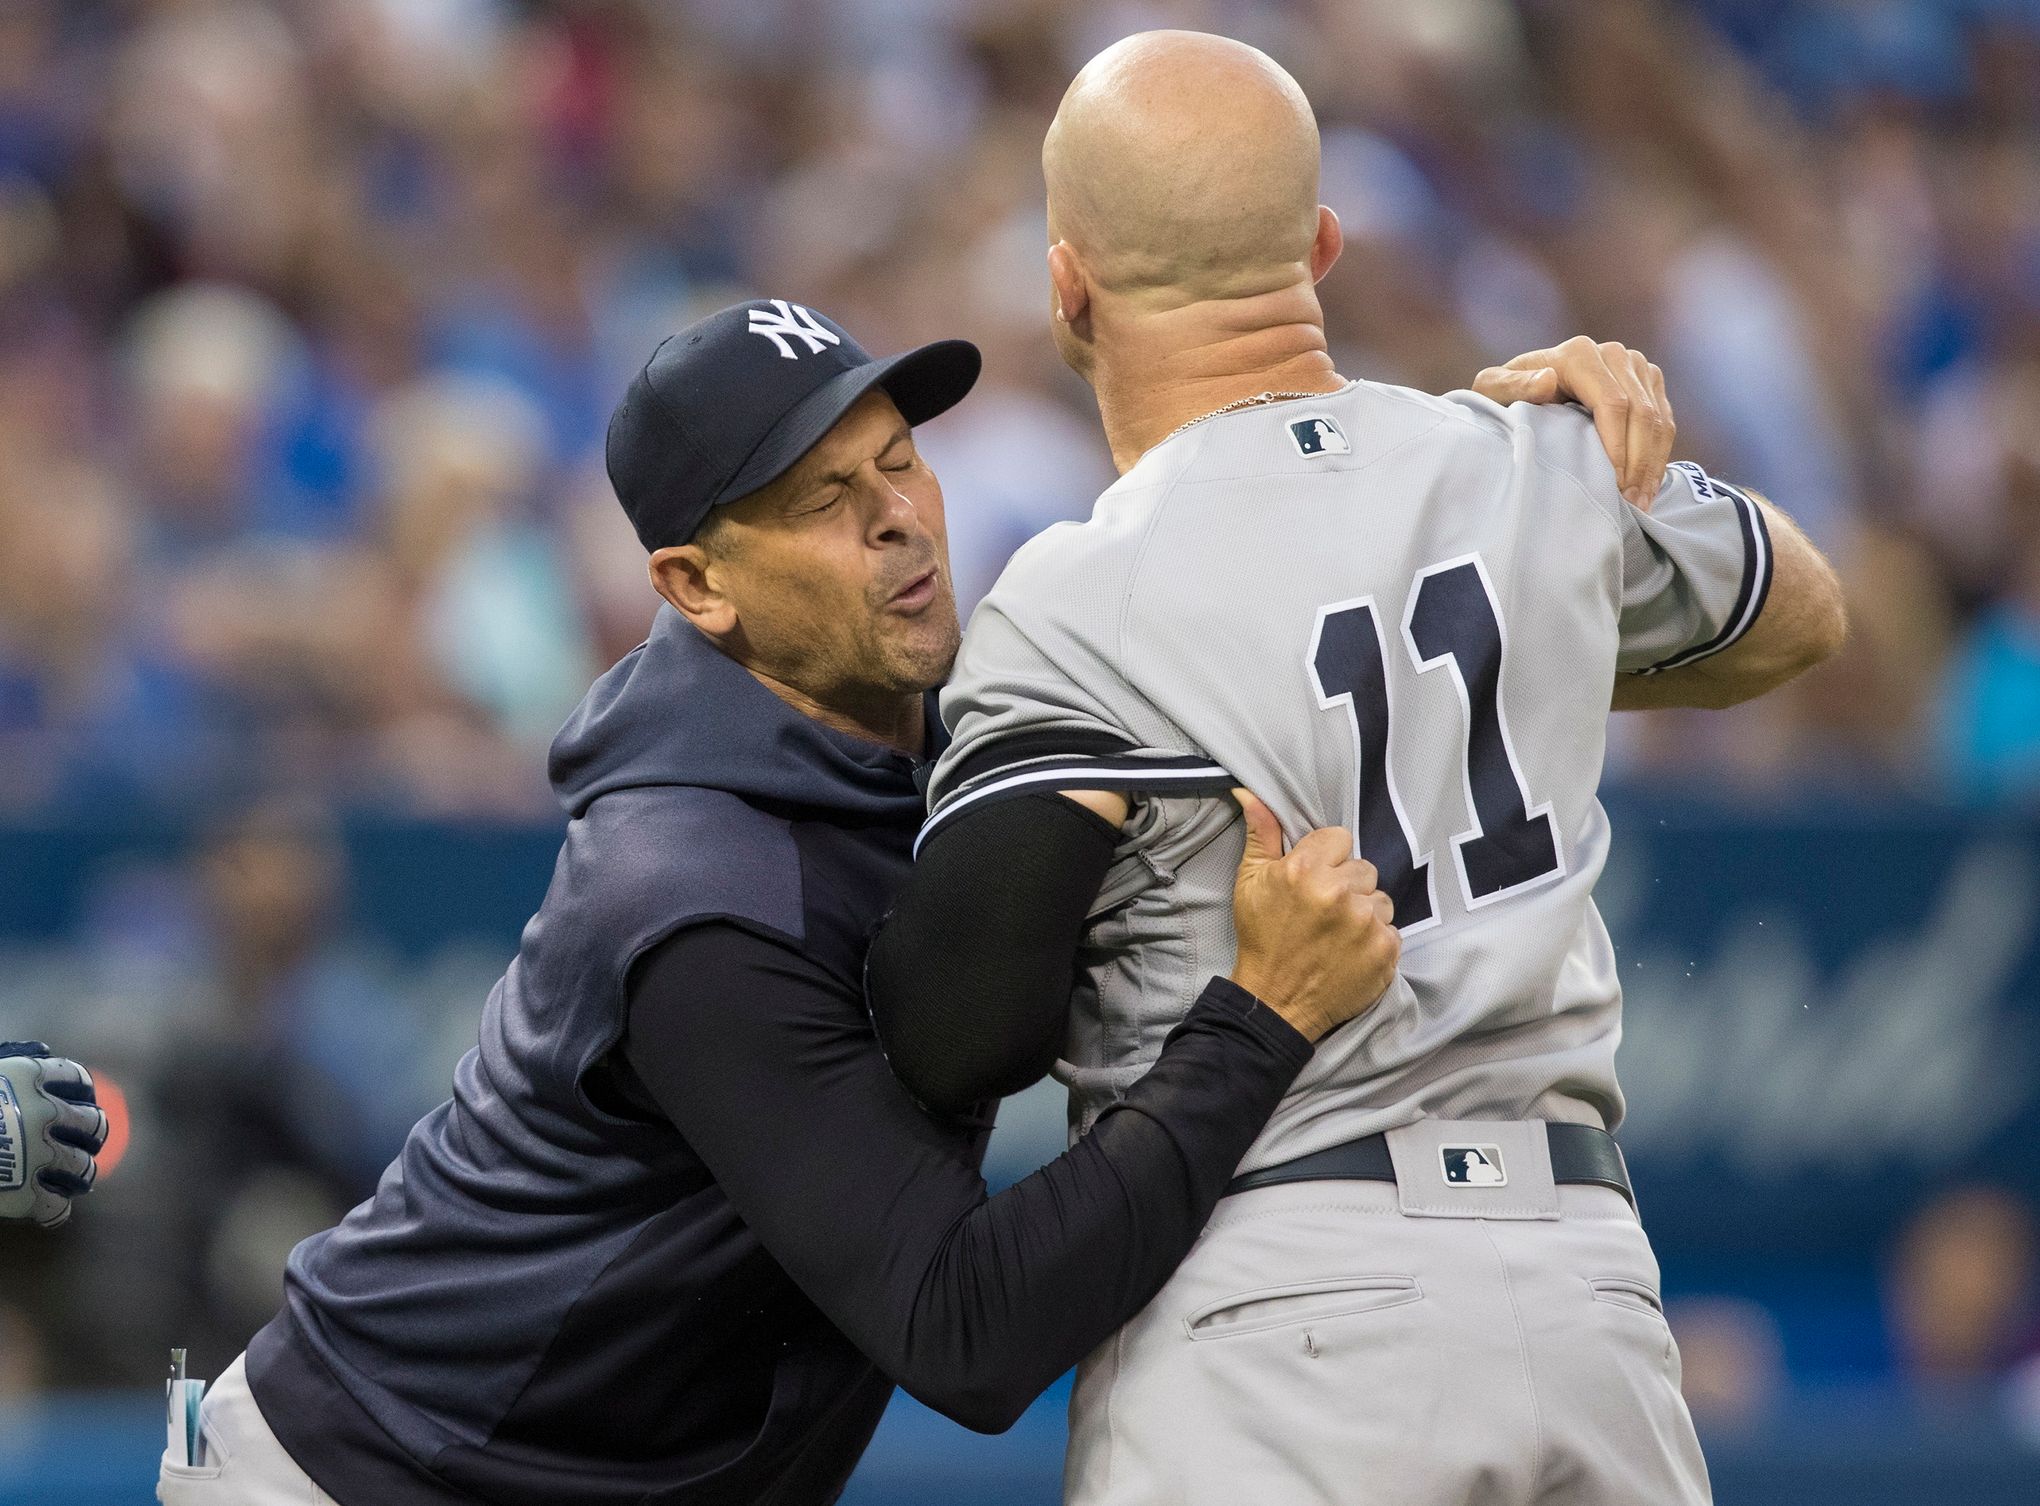 Yankees OF Brett Gardner restrained from going after umpire